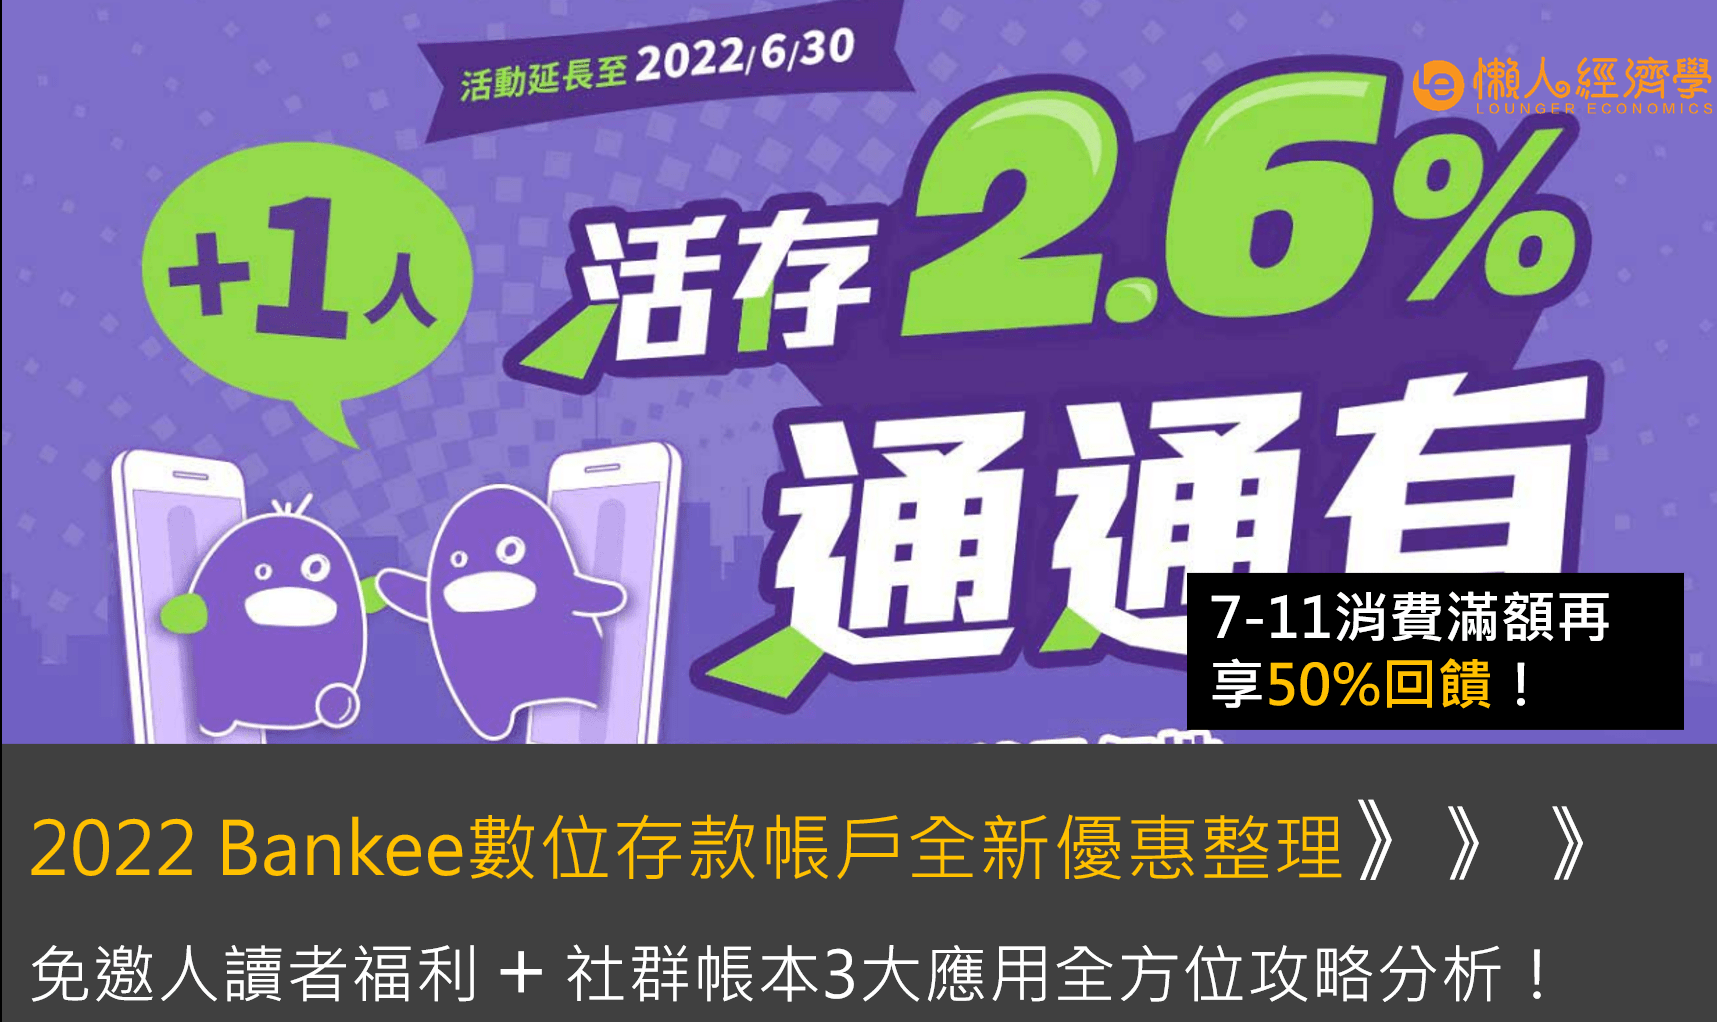 2022 Bankee全新優惠